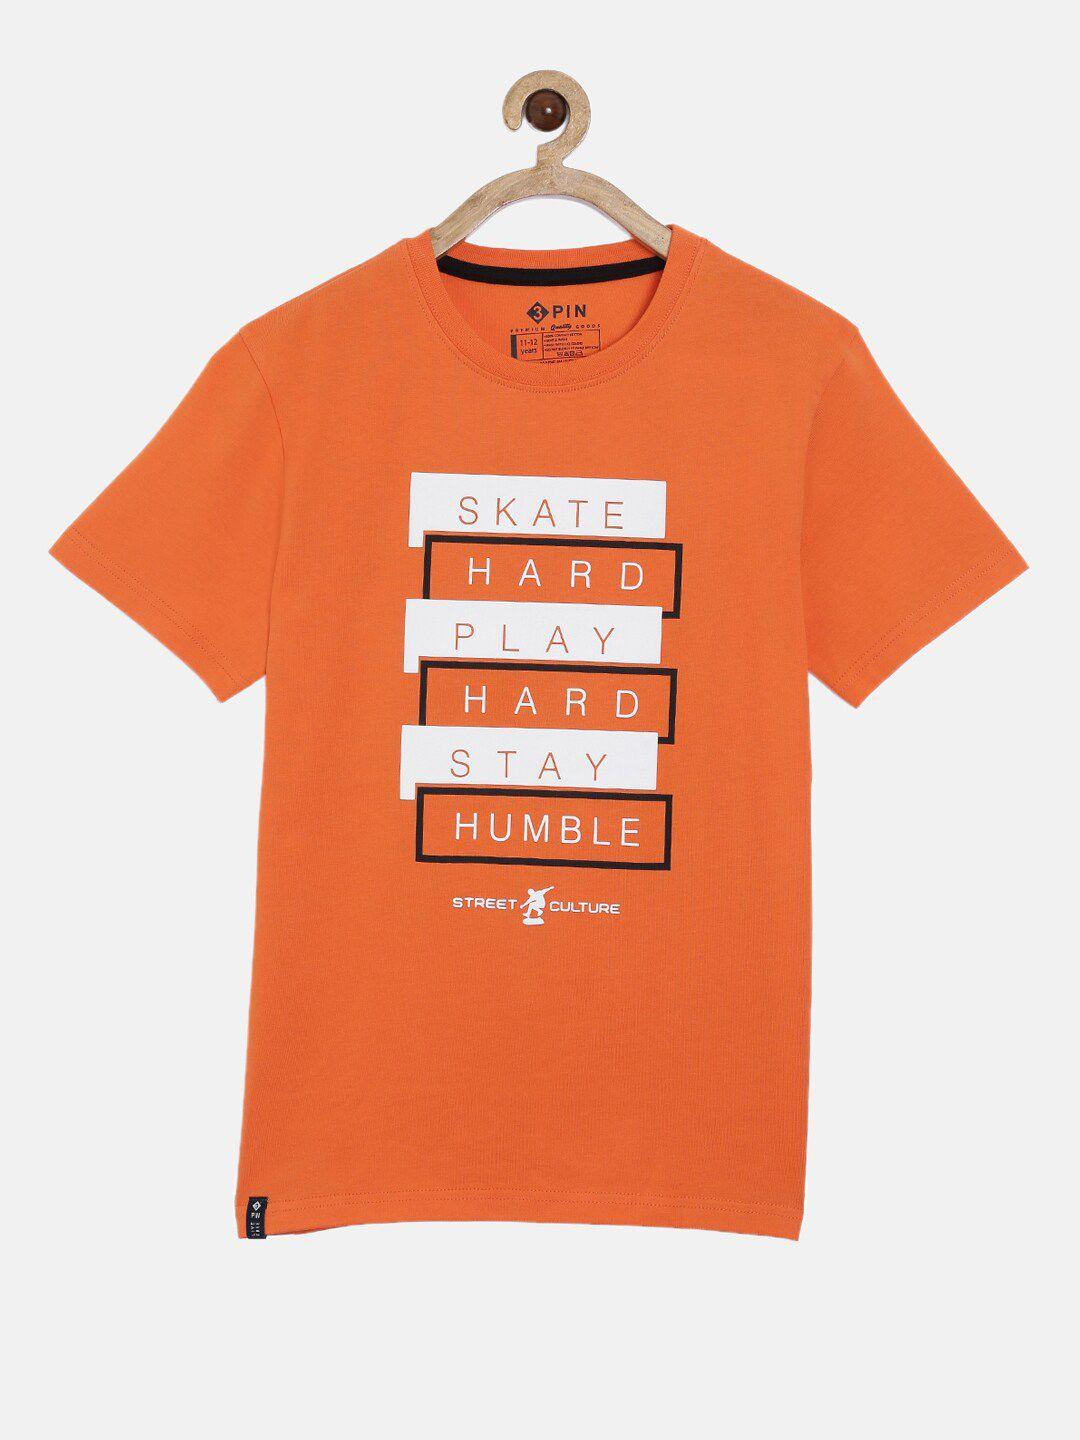 3pin-boys-orange-printed-applique-t-shirt